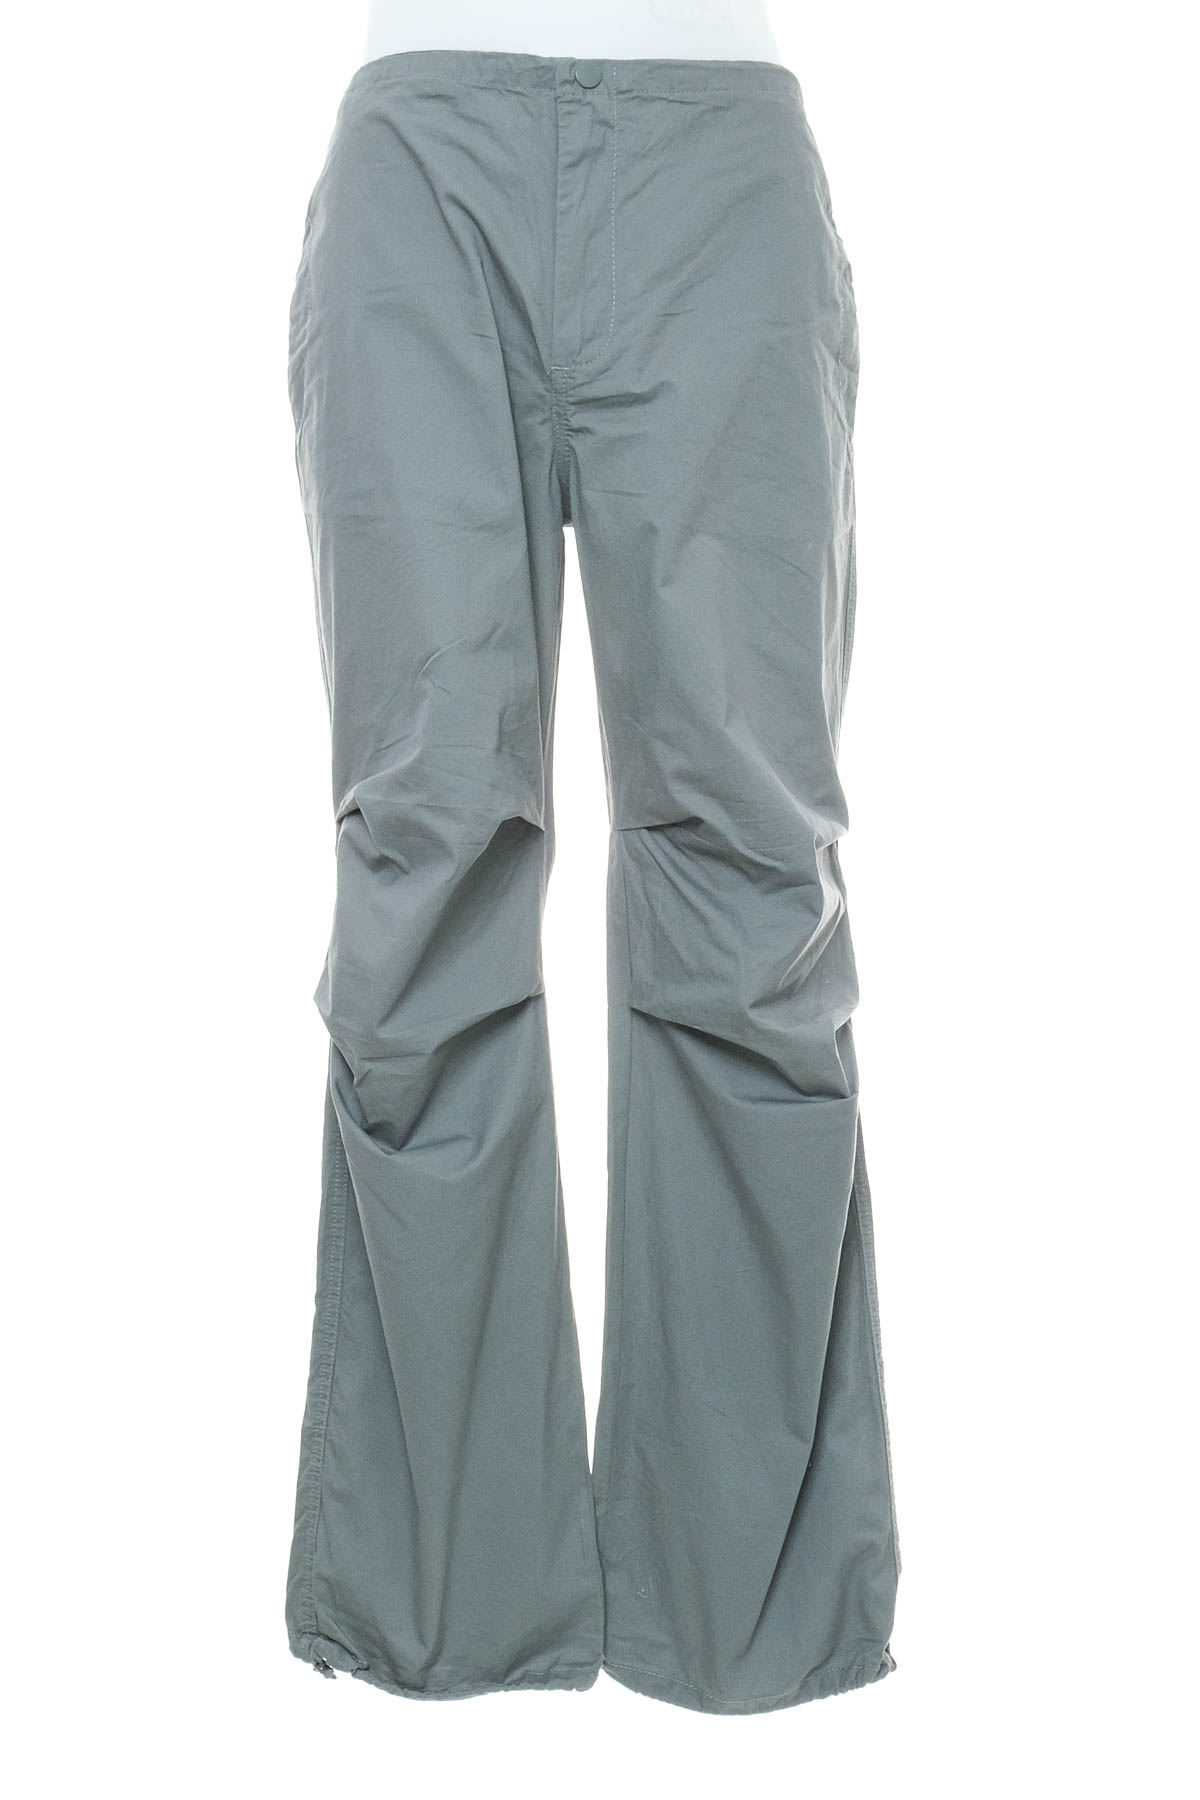 Men's trousers - Supre - 0